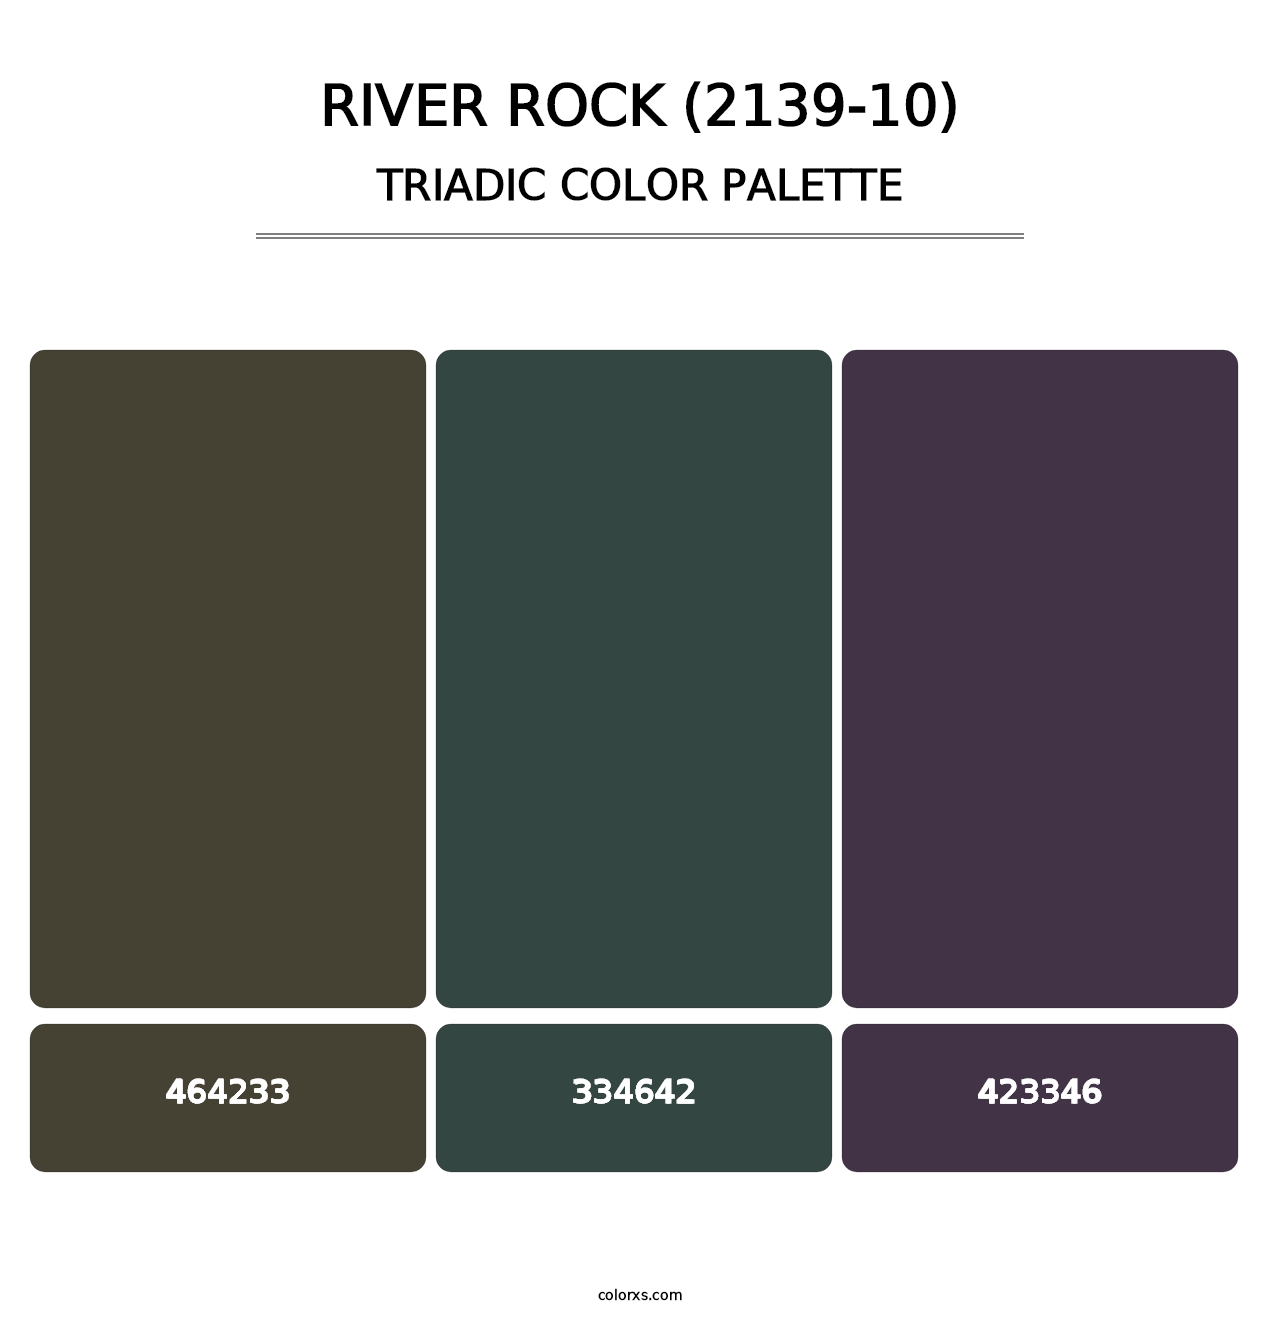 River Rock (2139-10) - Triadic Color Palette